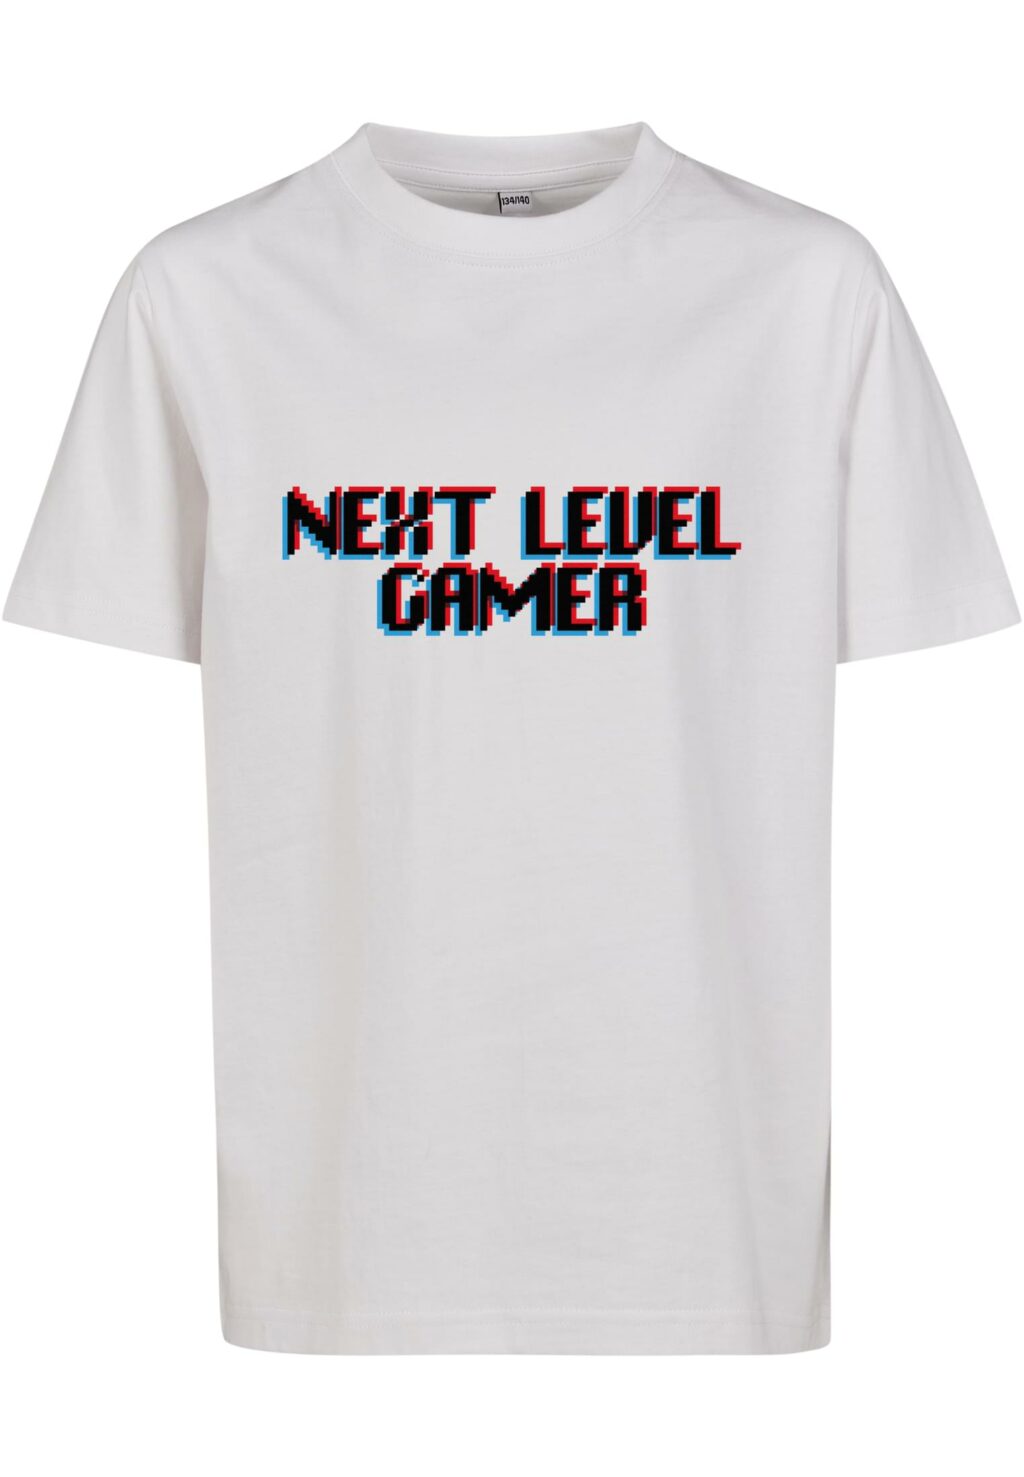 Kids Next Level Gamer Tee white MTK175